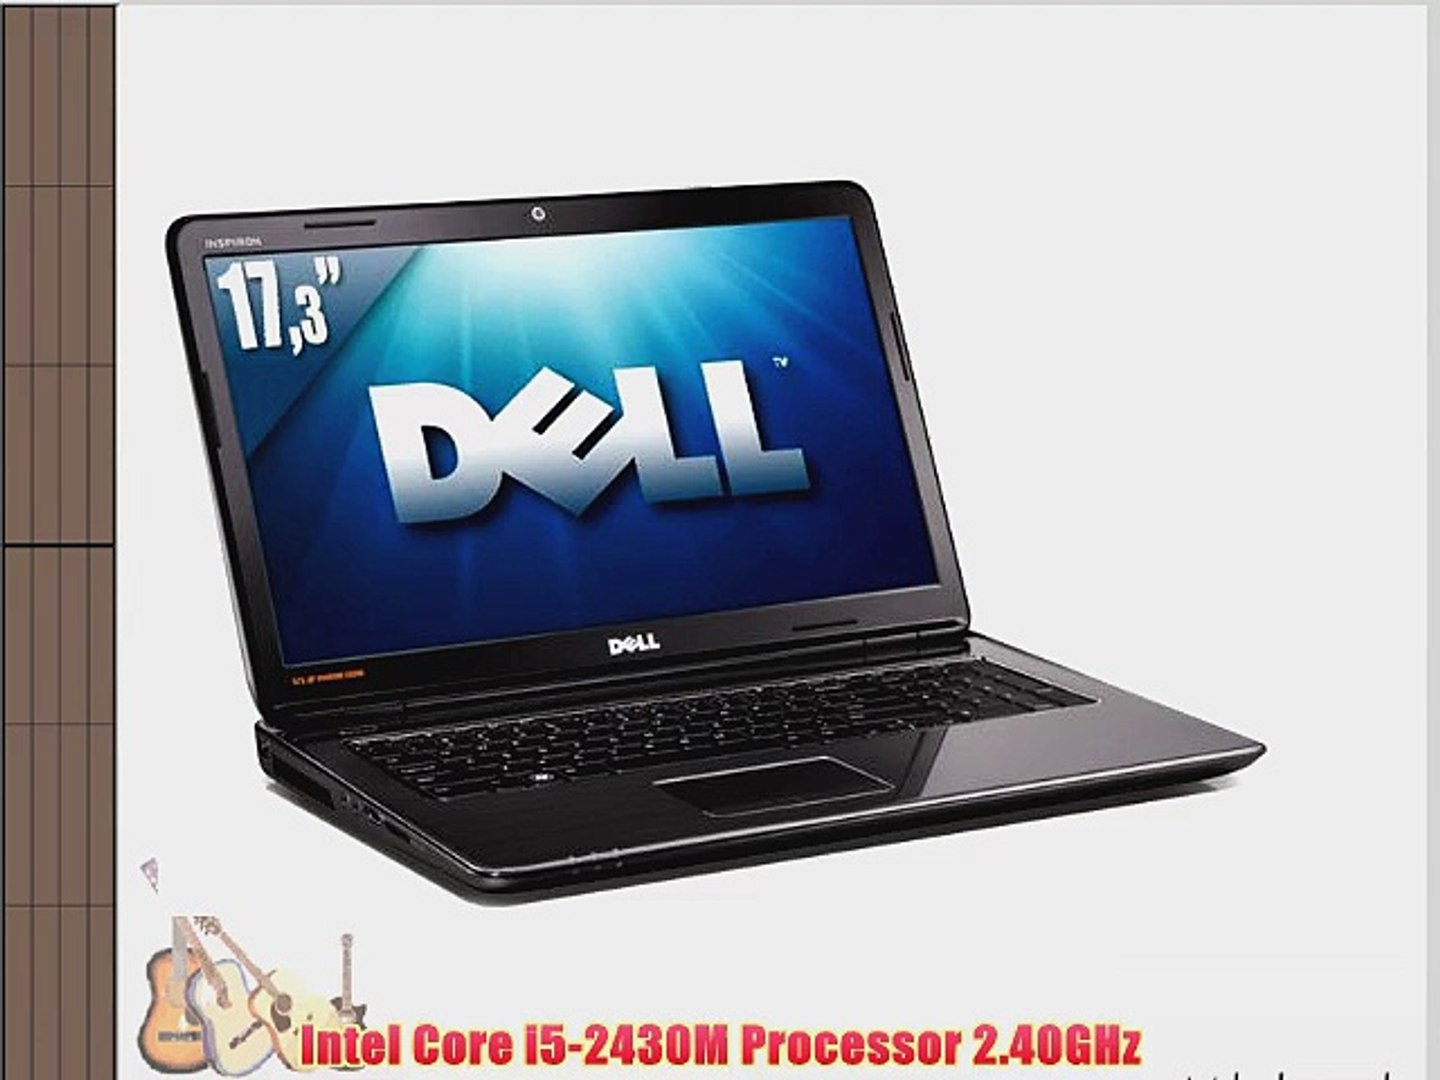 Модели ноутбуков dell. Dell Inspiron n7110. Dell Inspiron 17r. Dell 7110. Dell Inspiron 17.